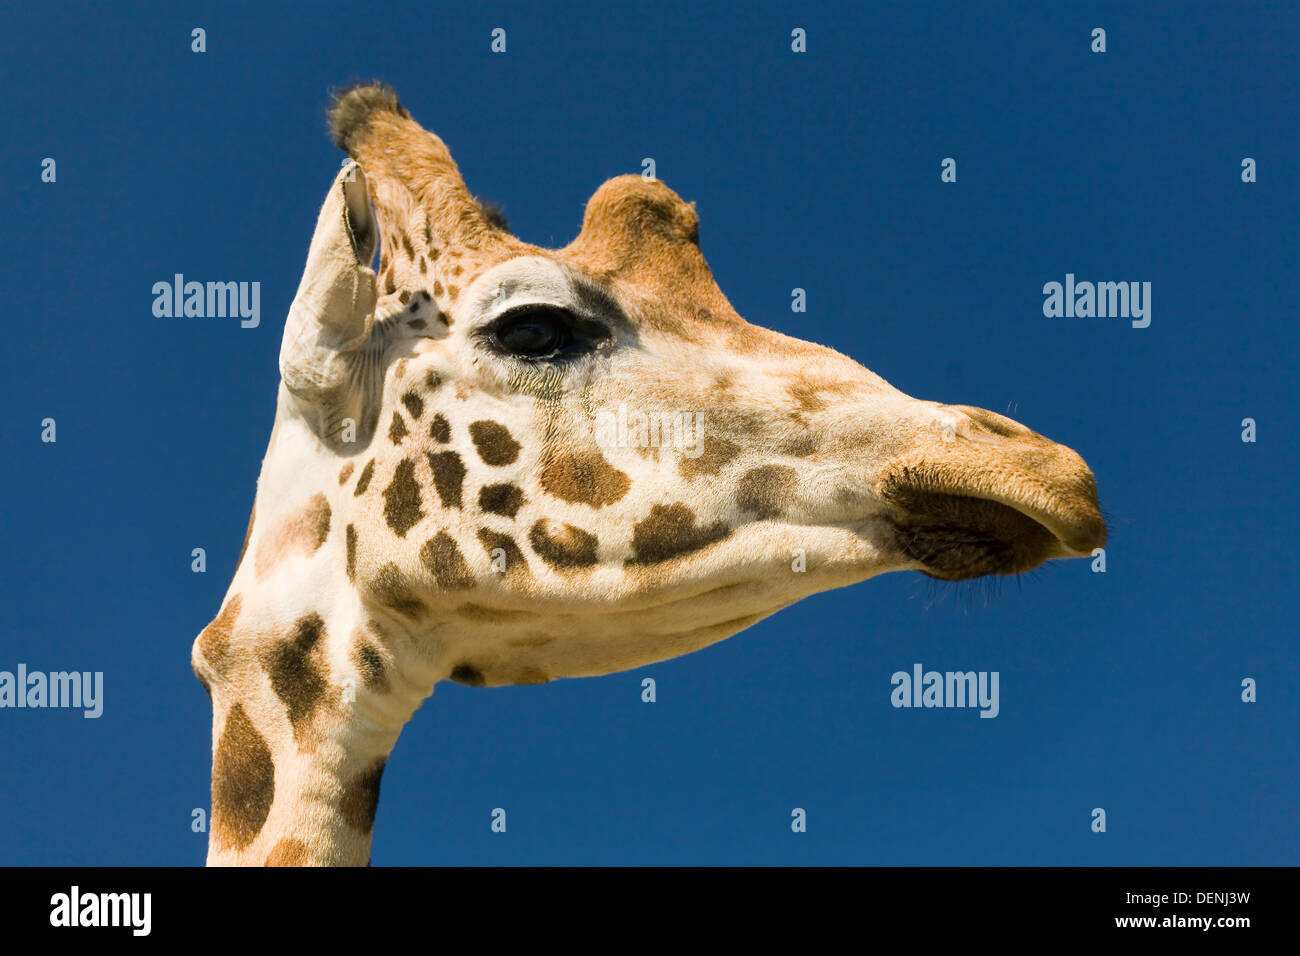 northern giraffe (Giraffa camelopardalis). Head detail. Stock Photo